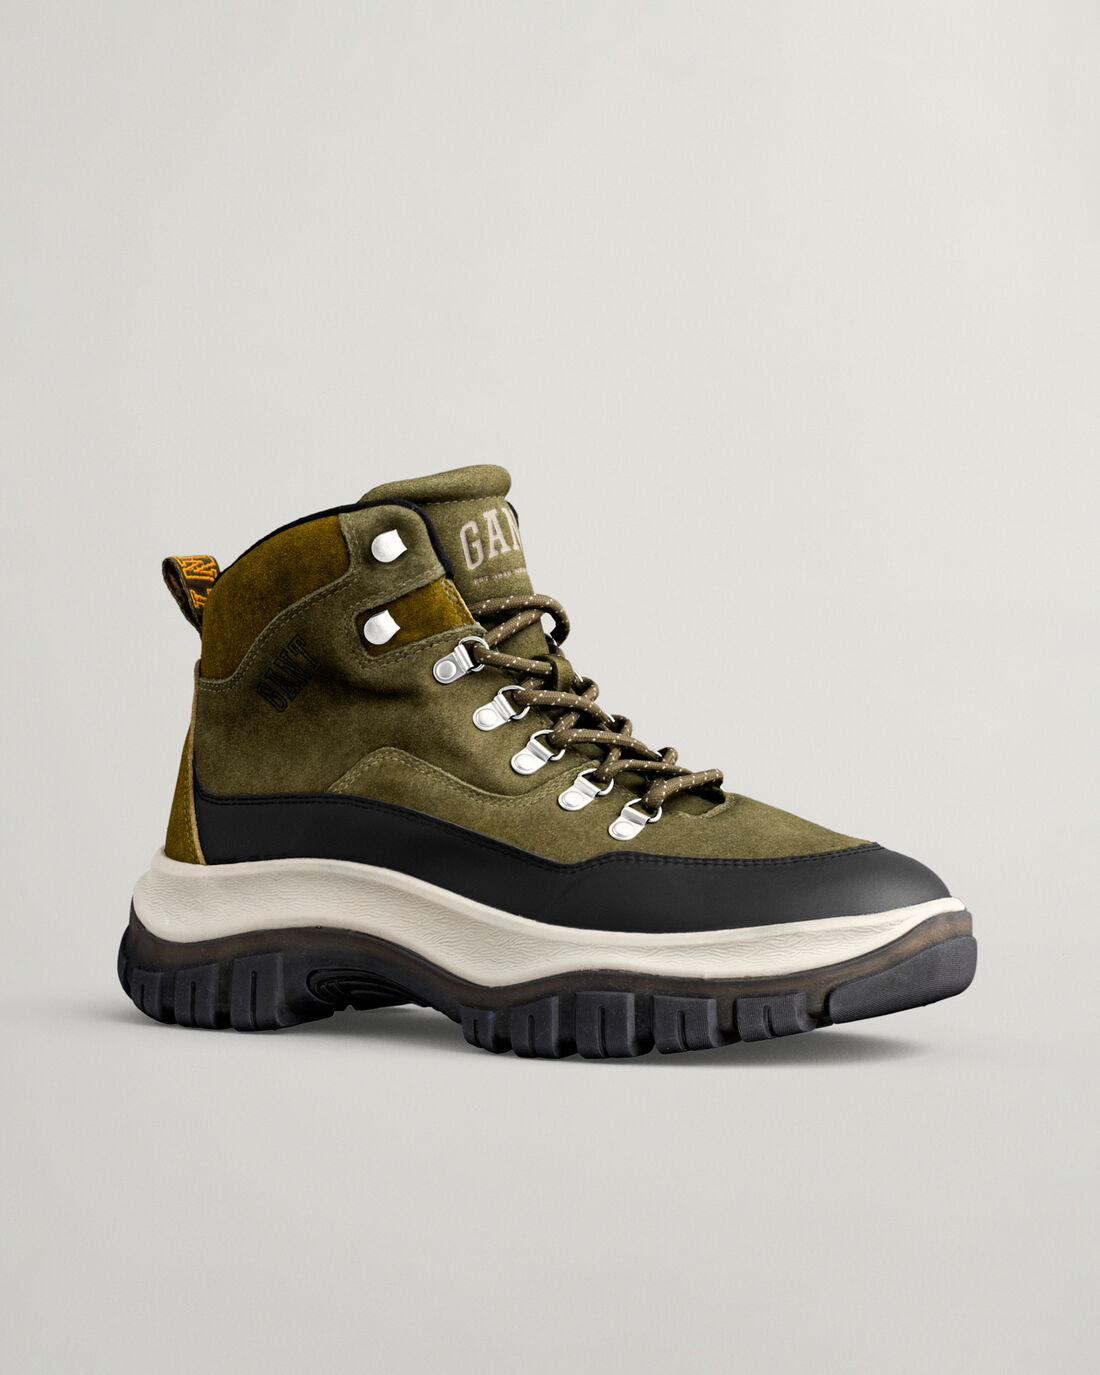 GANT Hillark Boot - Boots / Stiefel Herren